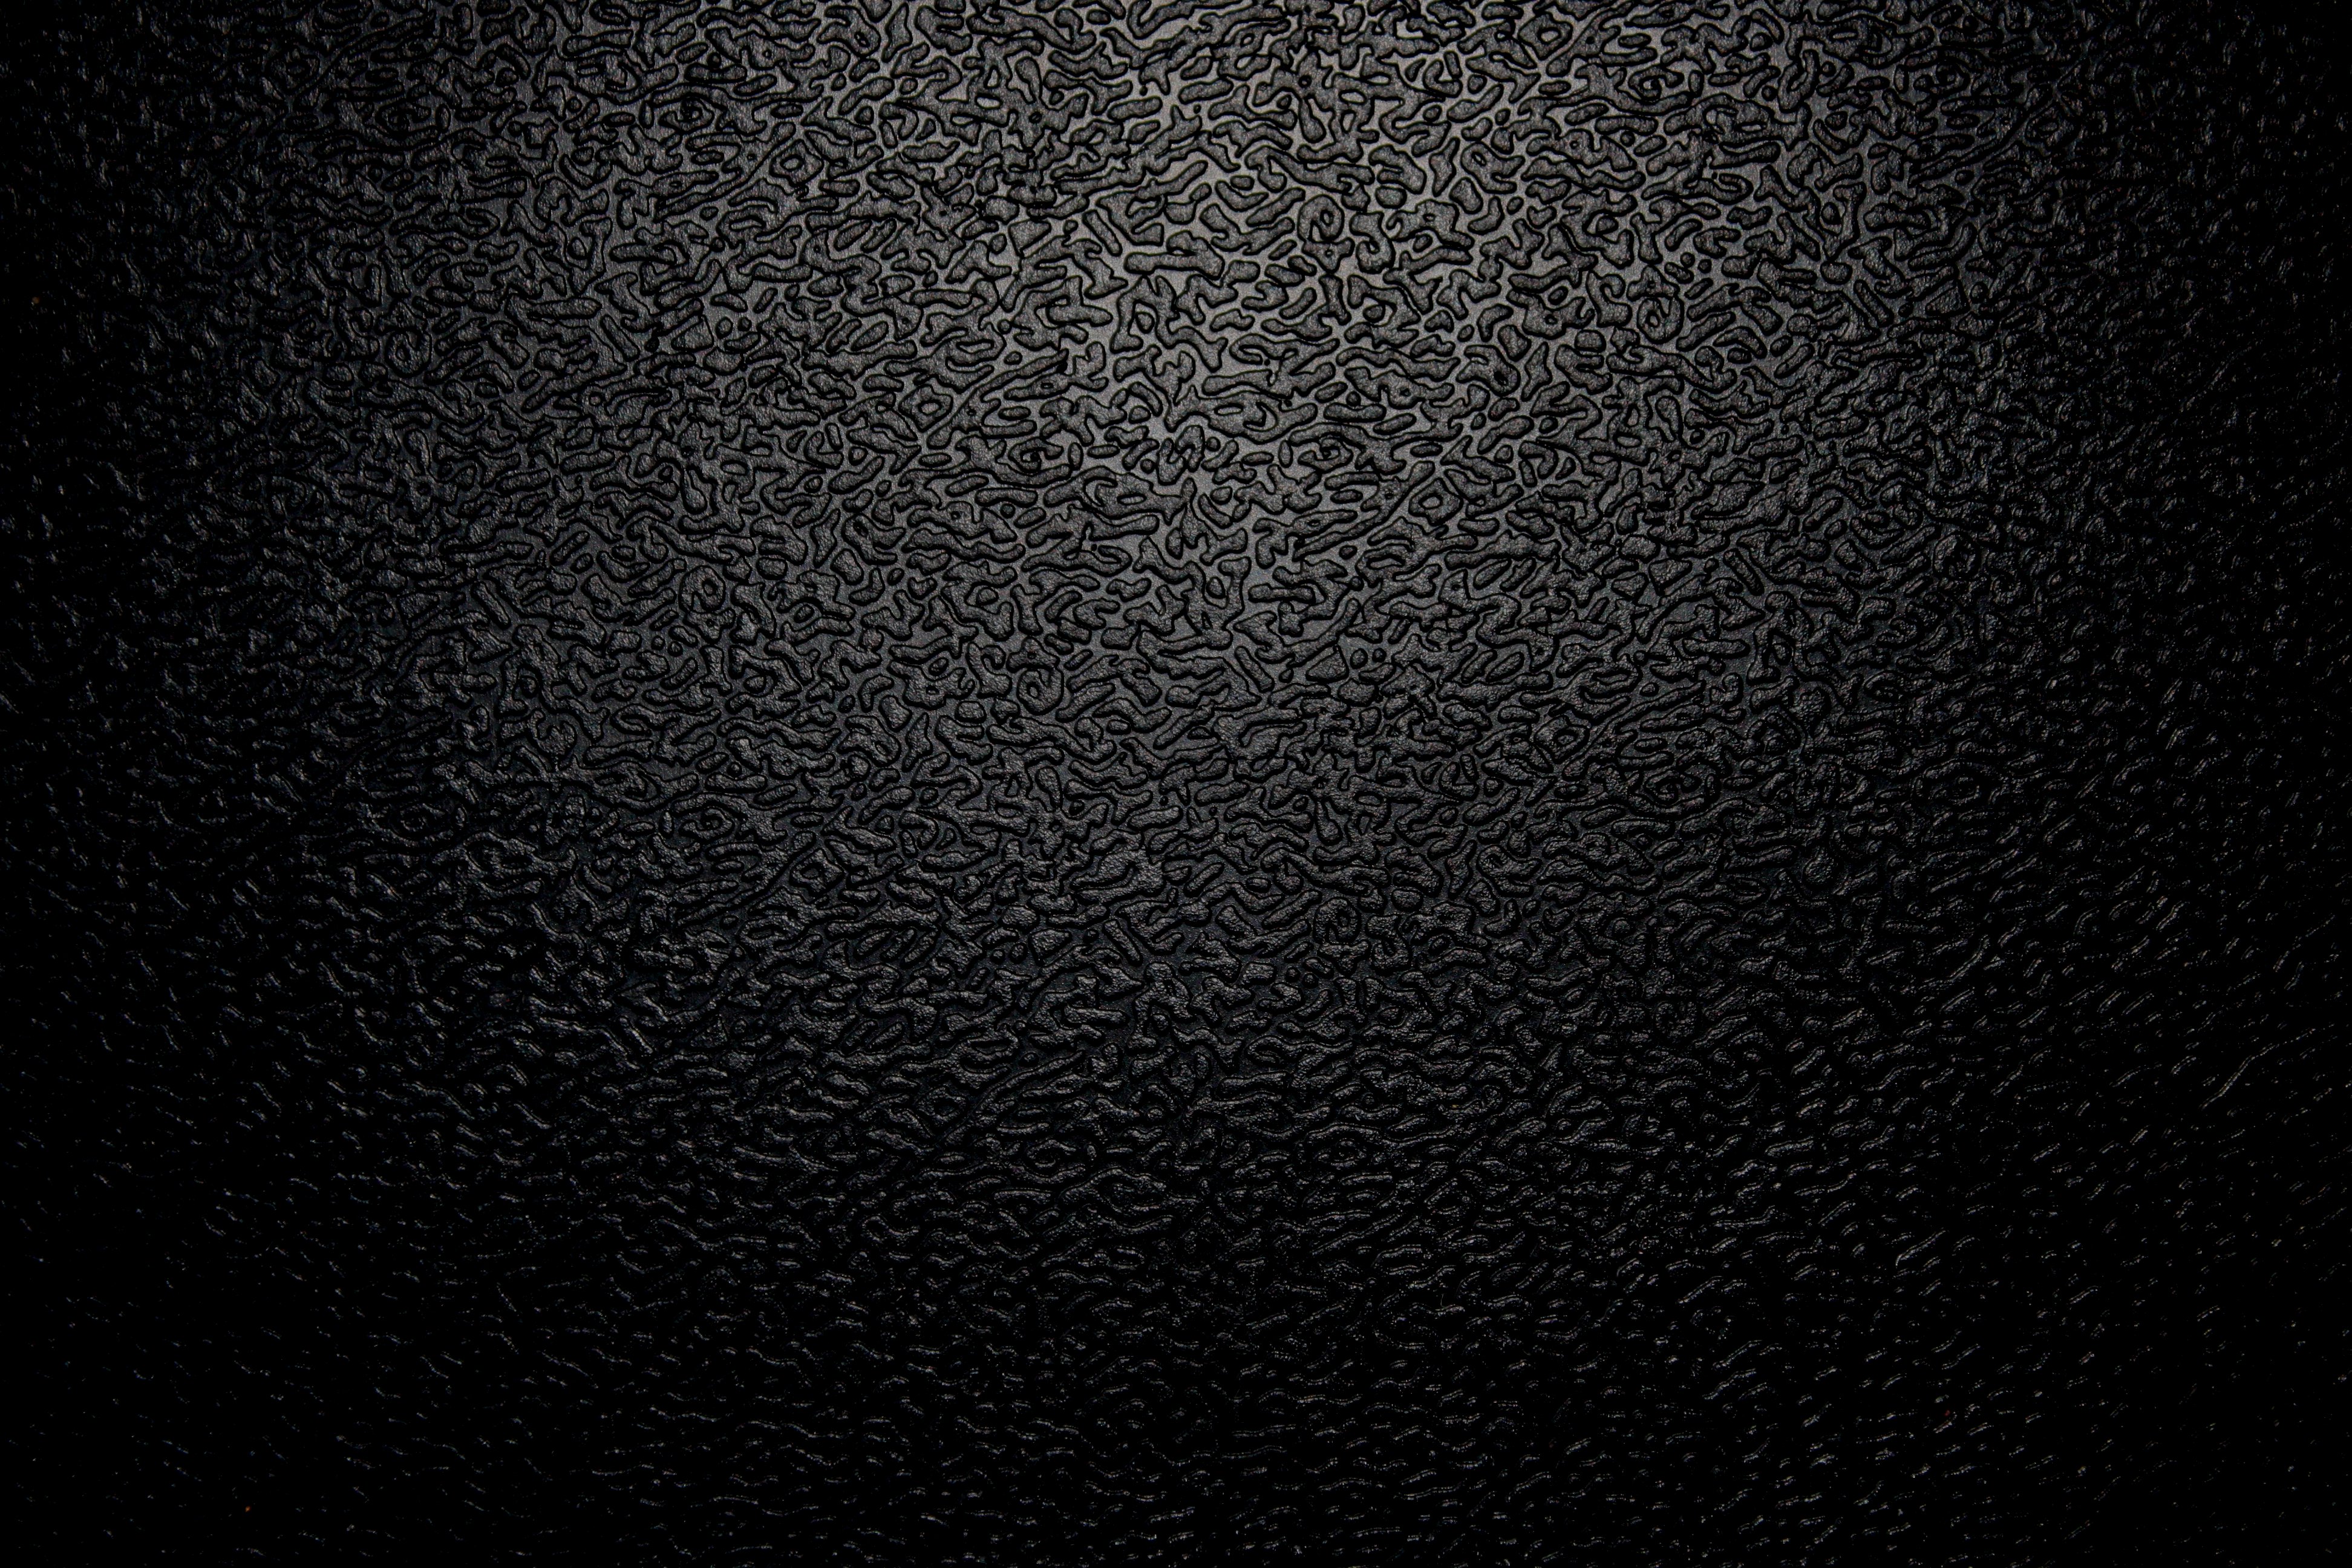 Textured Black Plastic Close Up Picture Photograph Photos